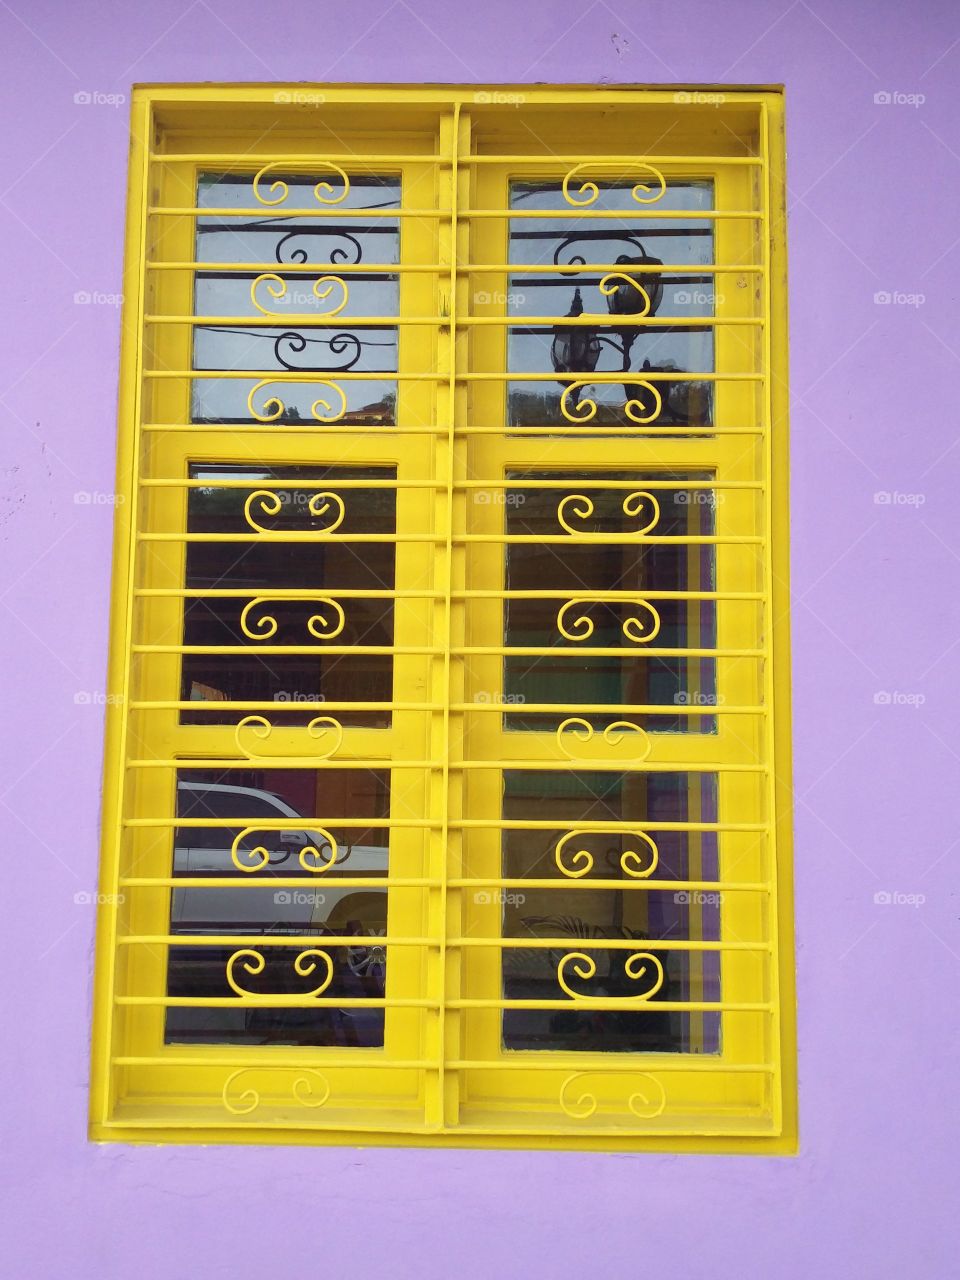 purple wall yellow window